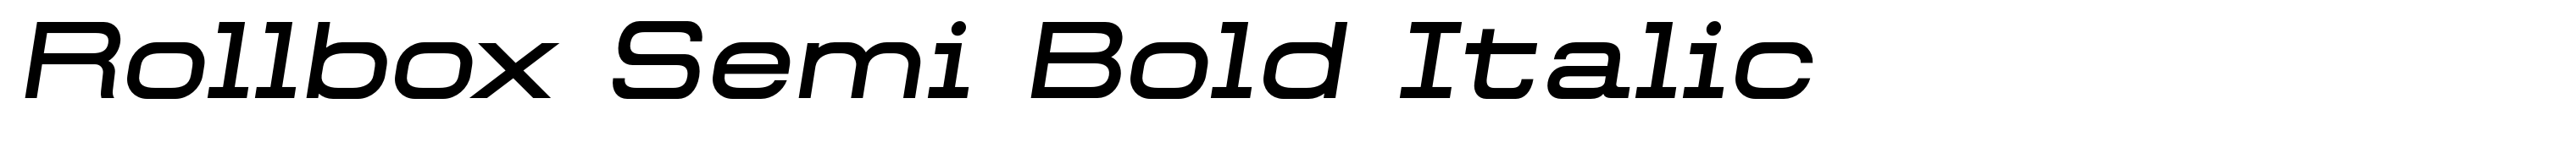 Rollbox Semi Bold Italic